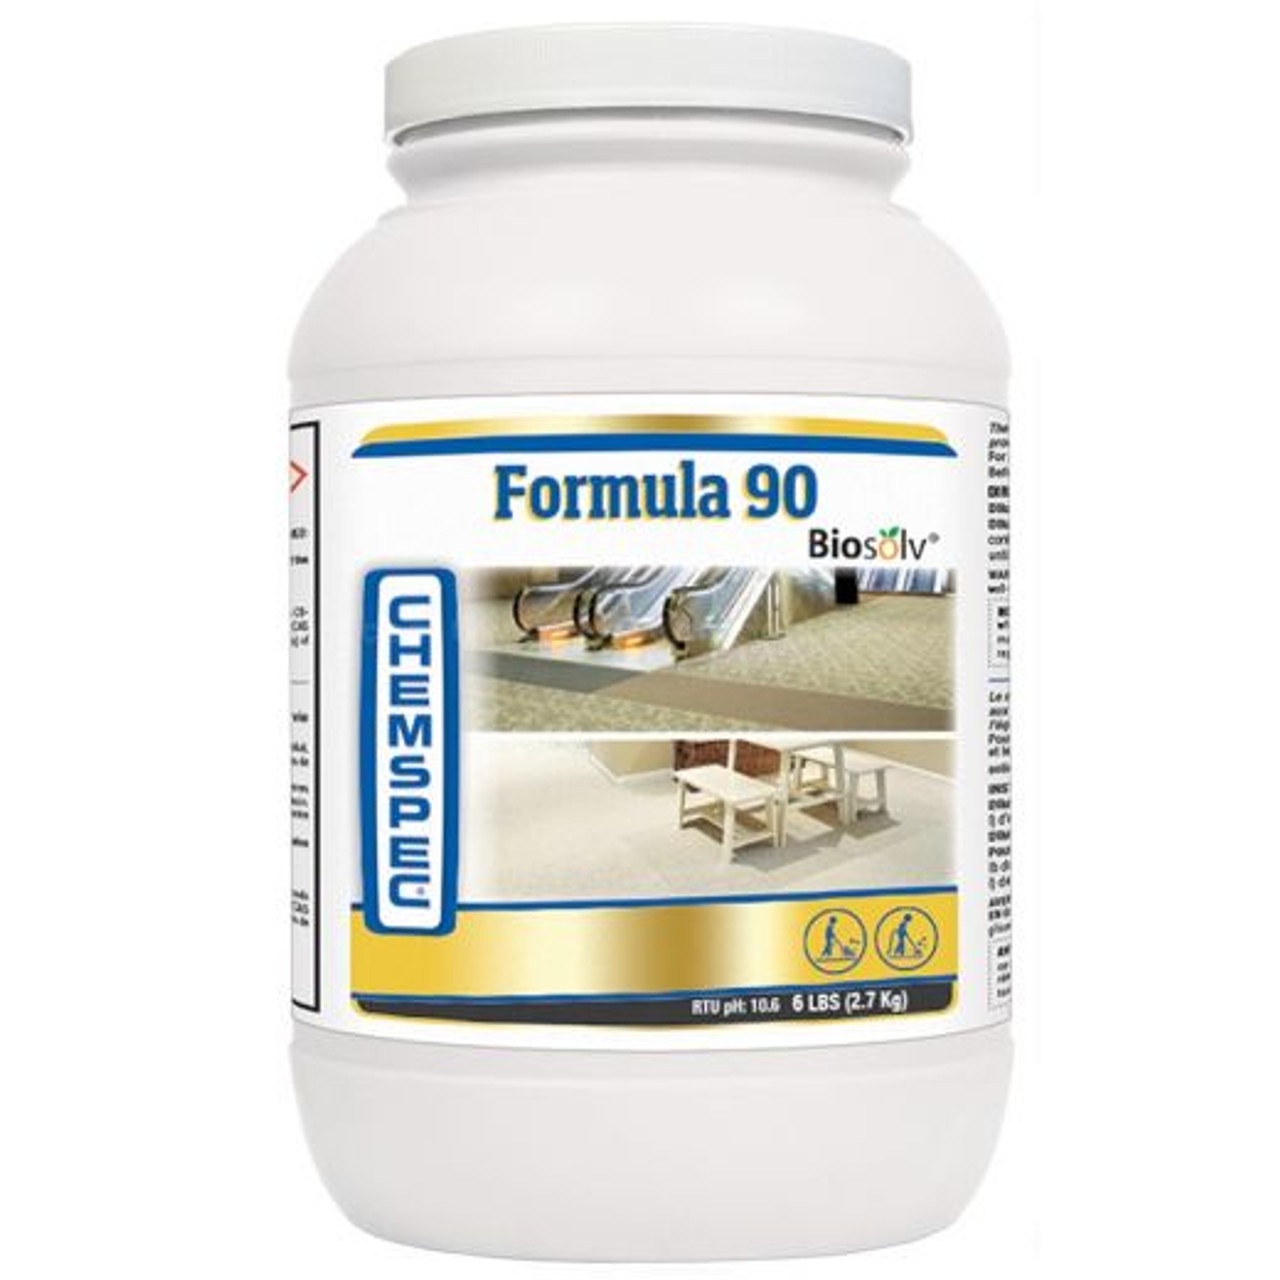 Chemspec Formula 90 with Biosolv - 6lbs - CASE of 4ea